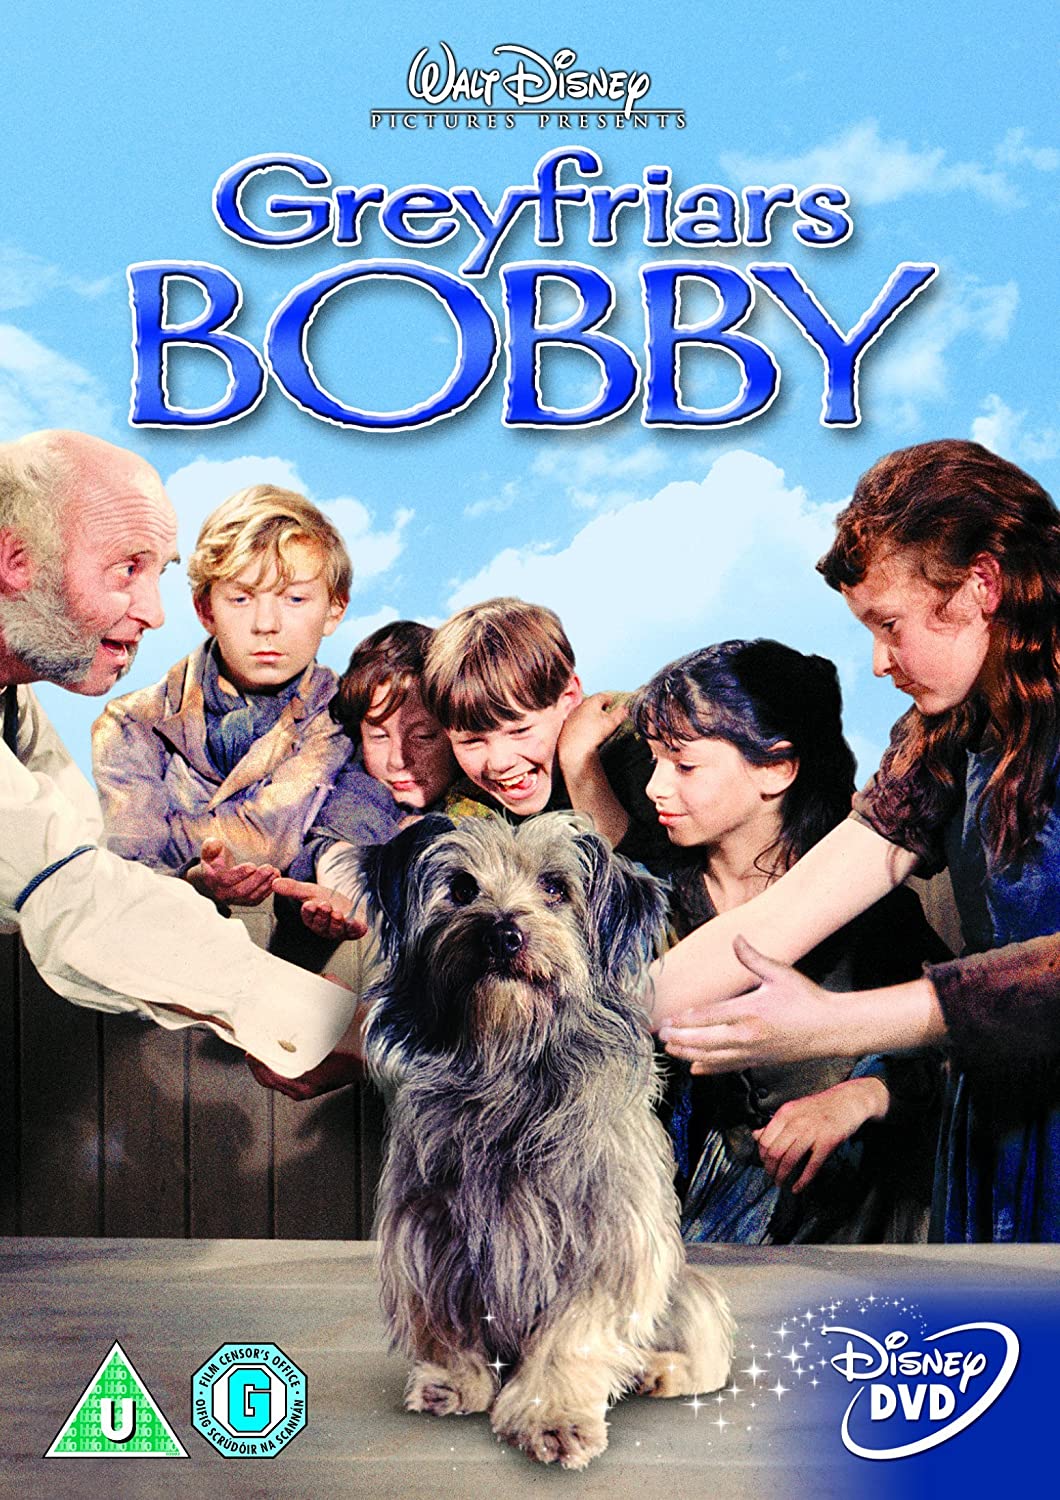 Greyfriars Bobby (1961) - Family/Drama [DVD]